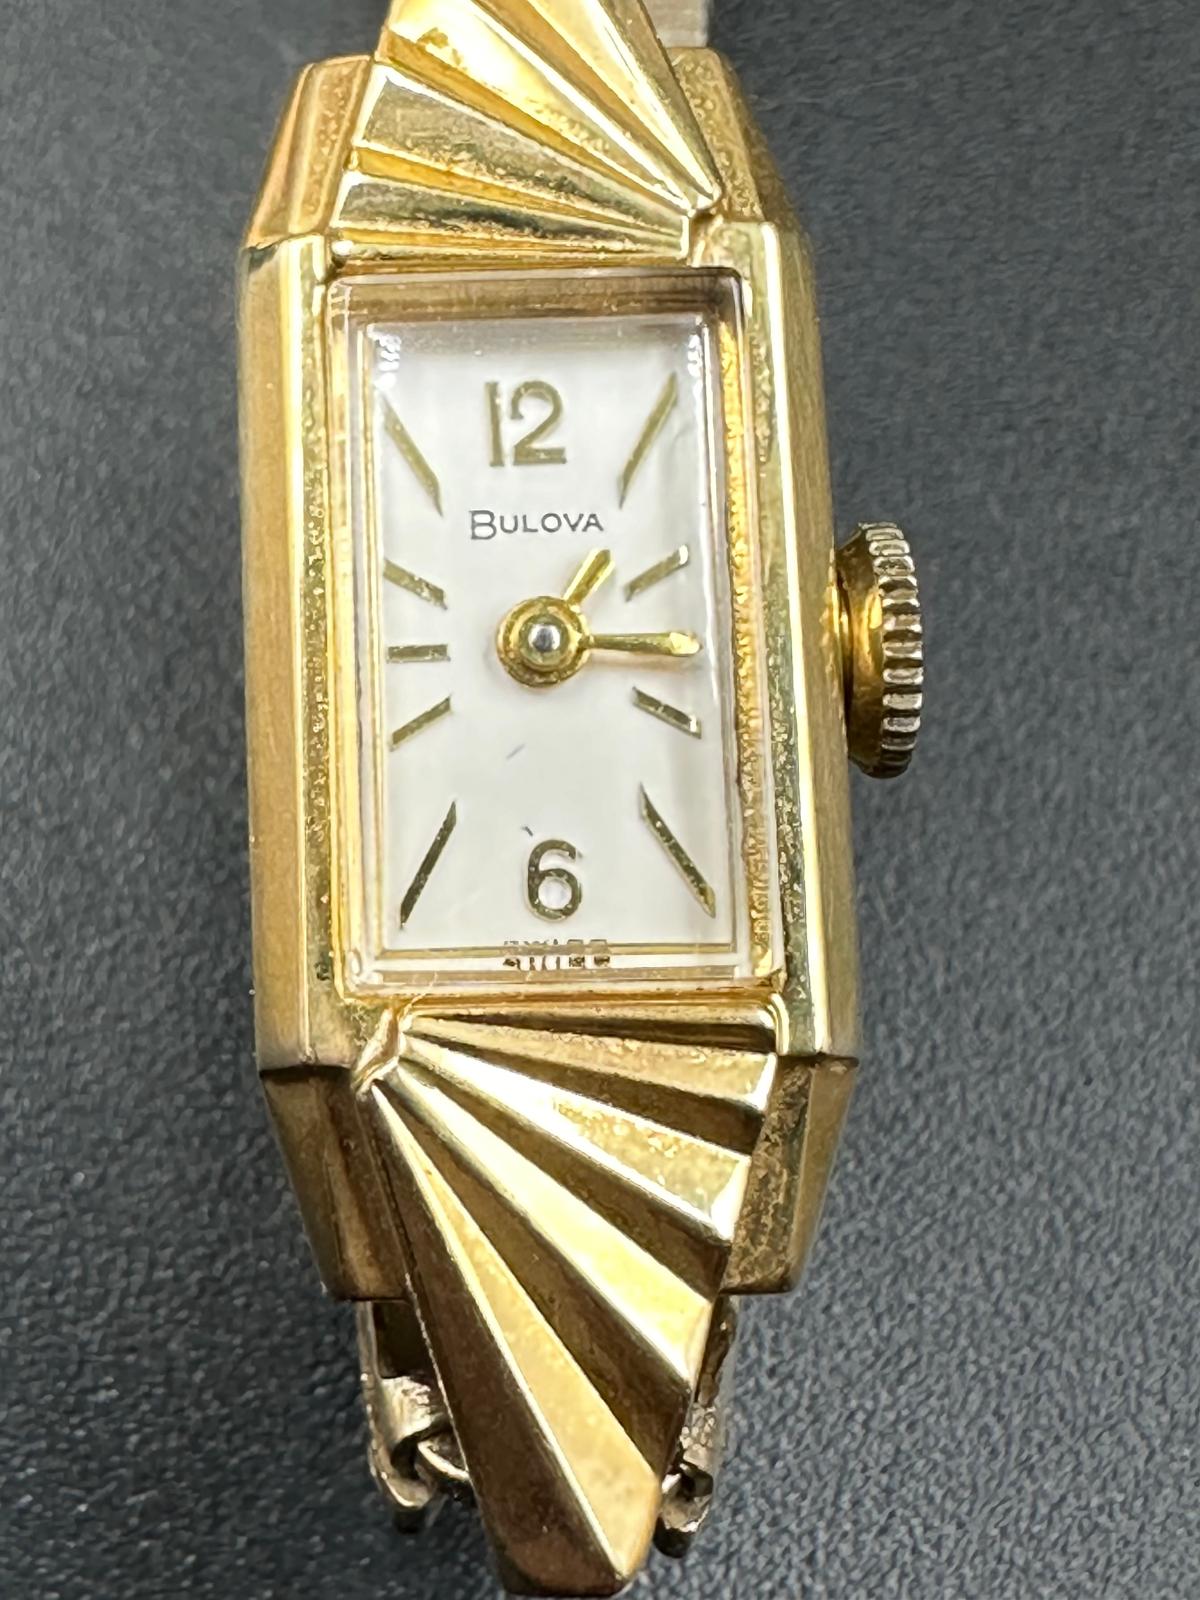 A 14k yellow gold Bulova ladies wristwatch on gold plated bracelet with original box etc - Image 5 of 6